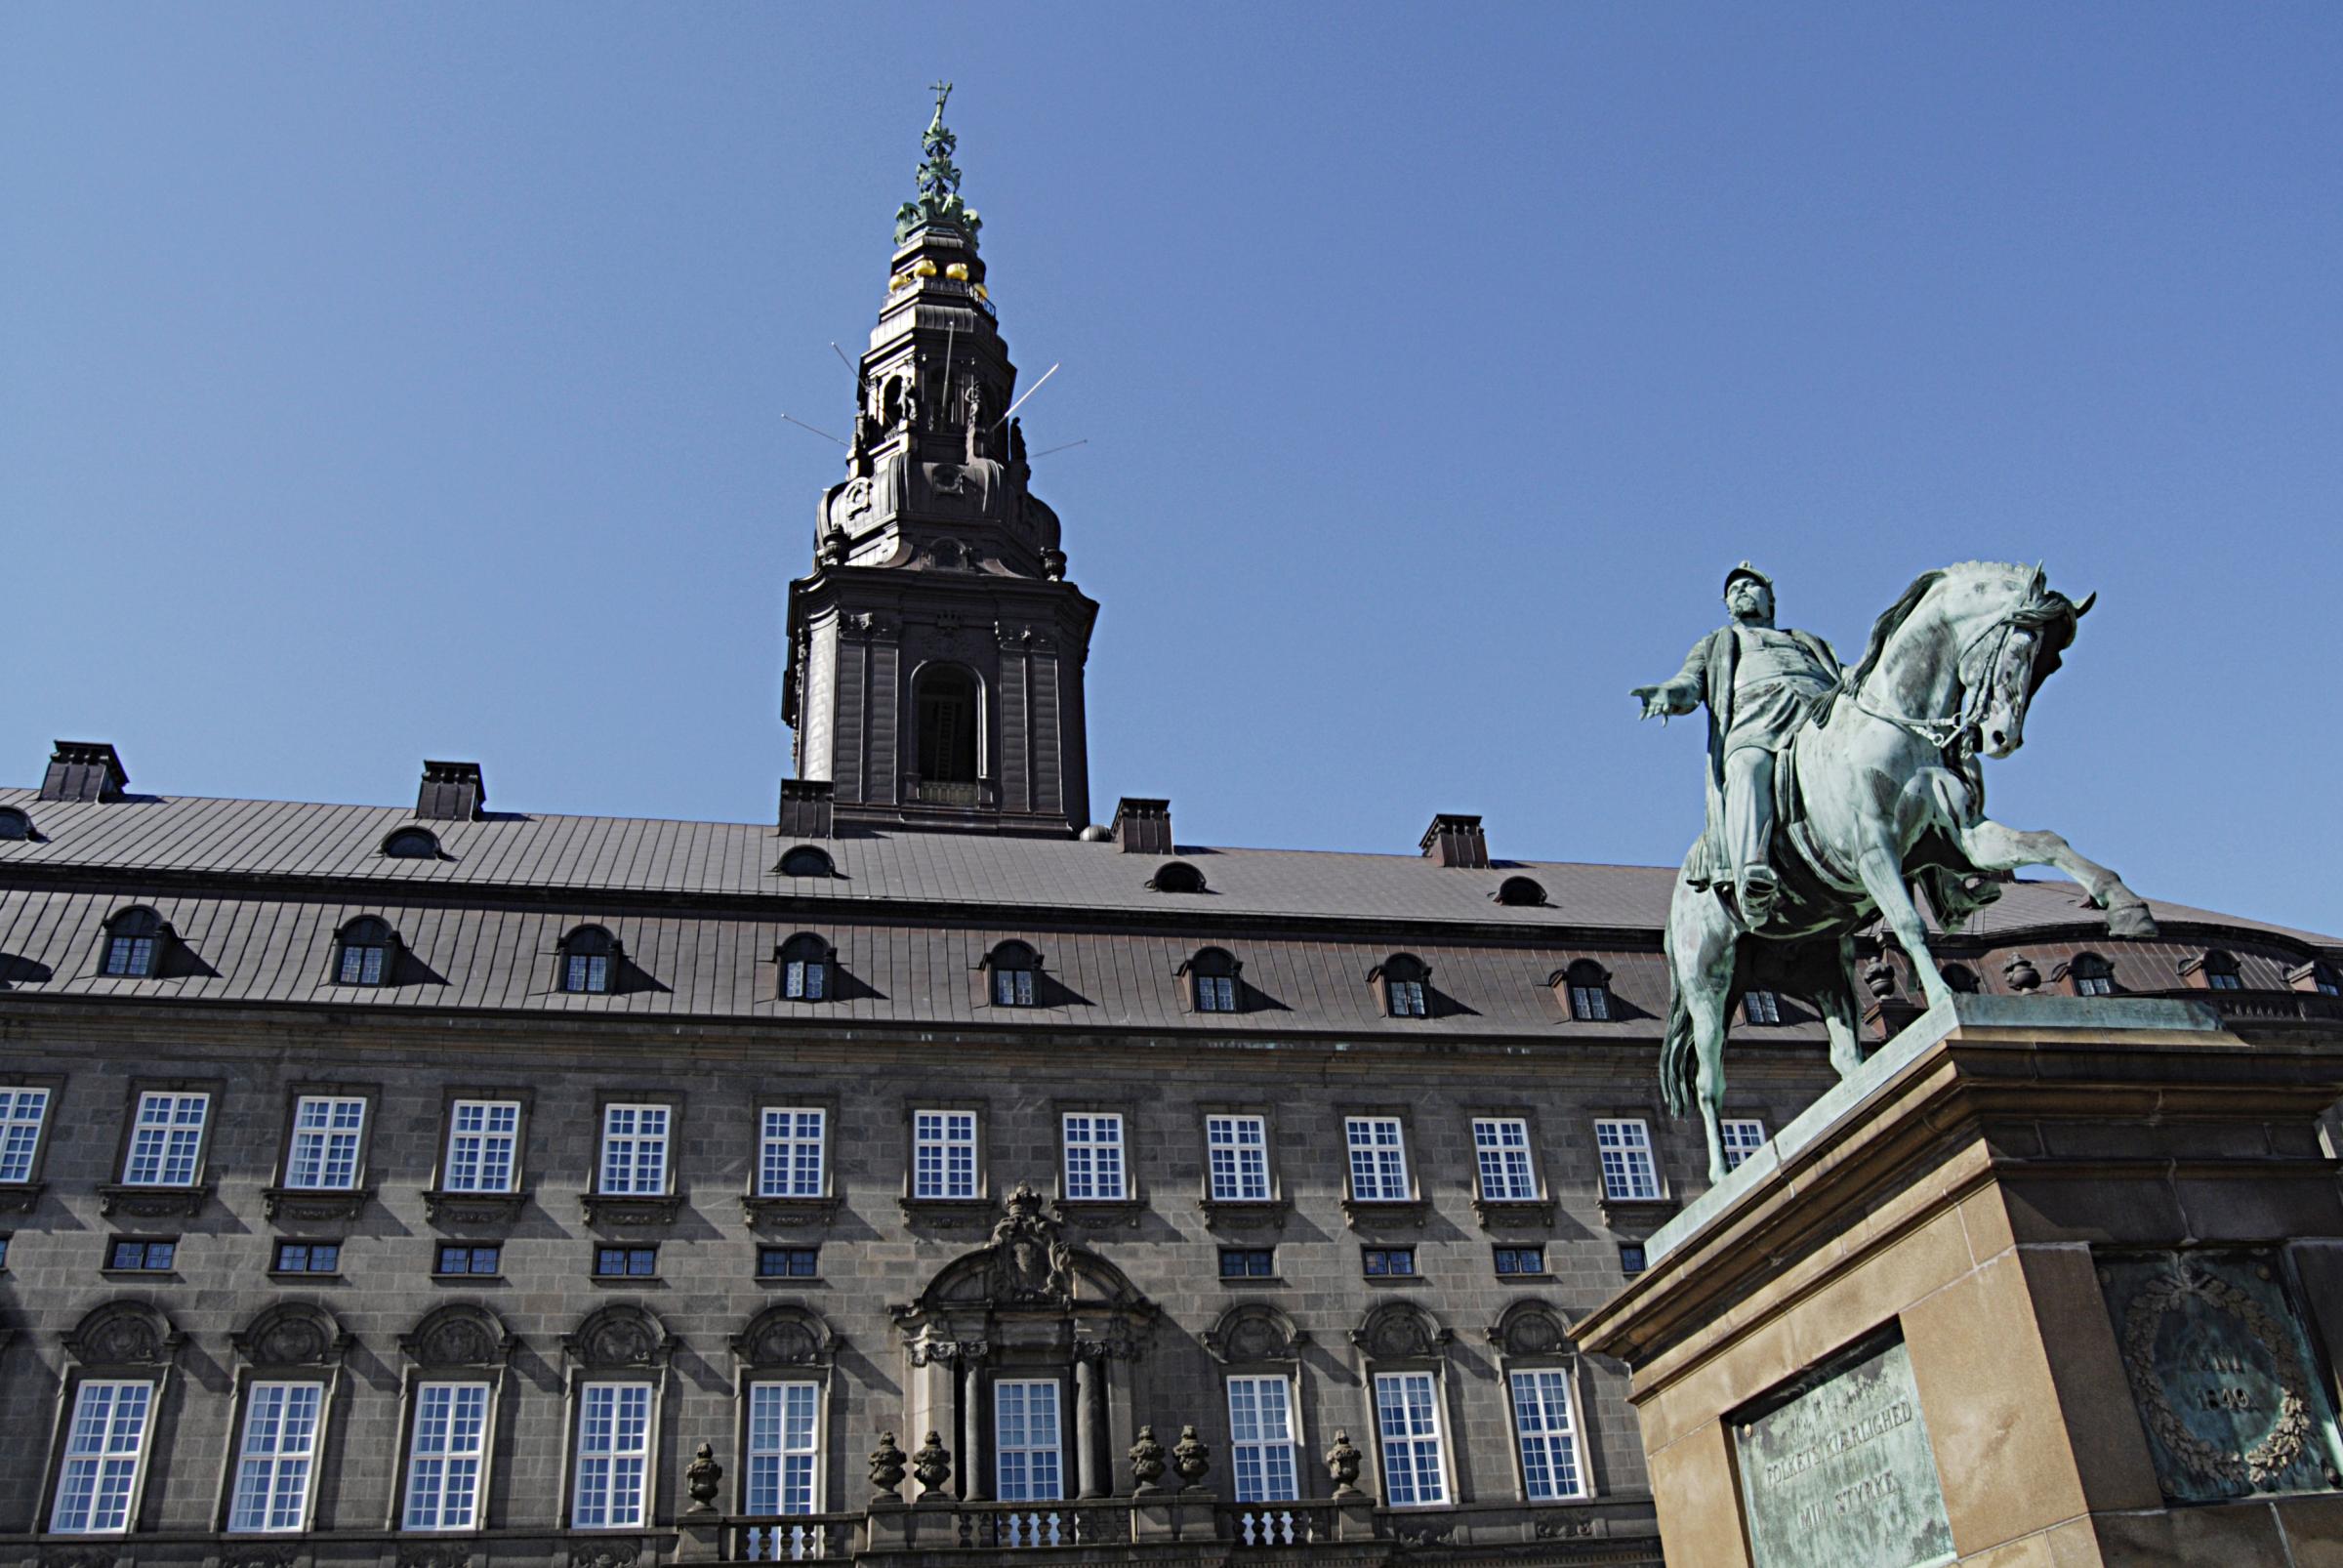 Christiansborg palace where the Danish parliament resides April 28, 2014.